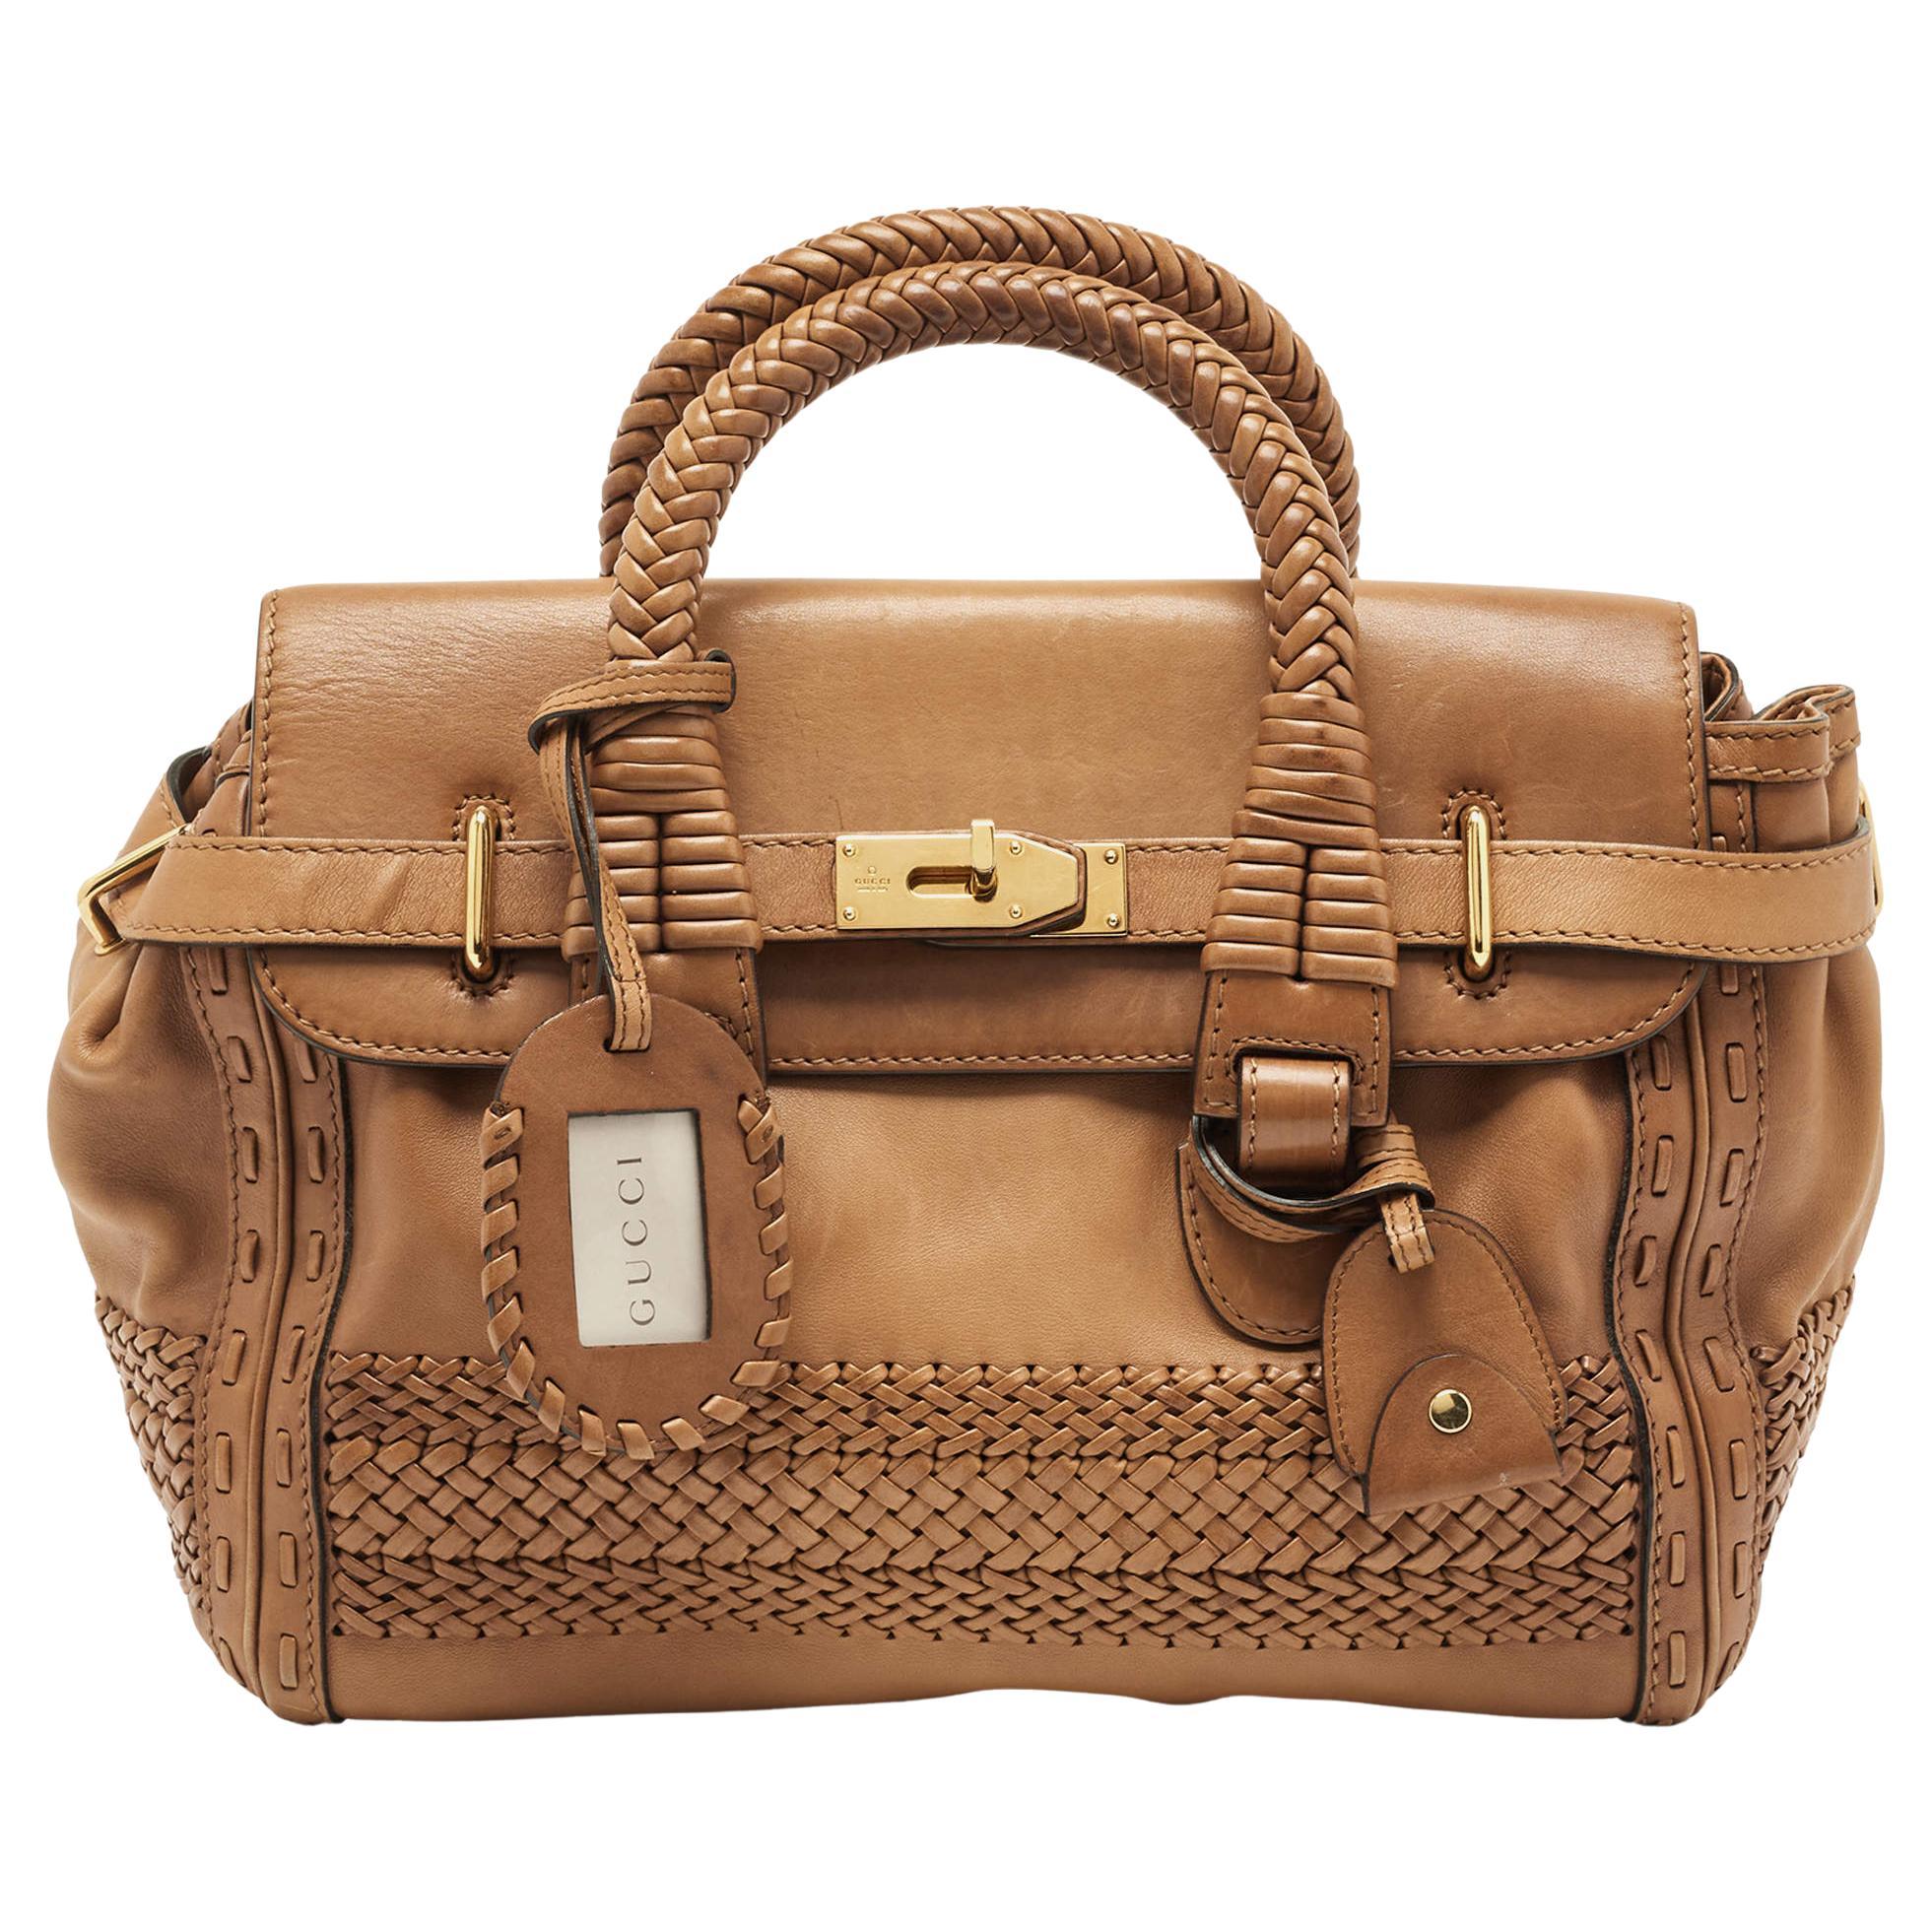 Gucci Brown Leather Handmade Top Handle Bag